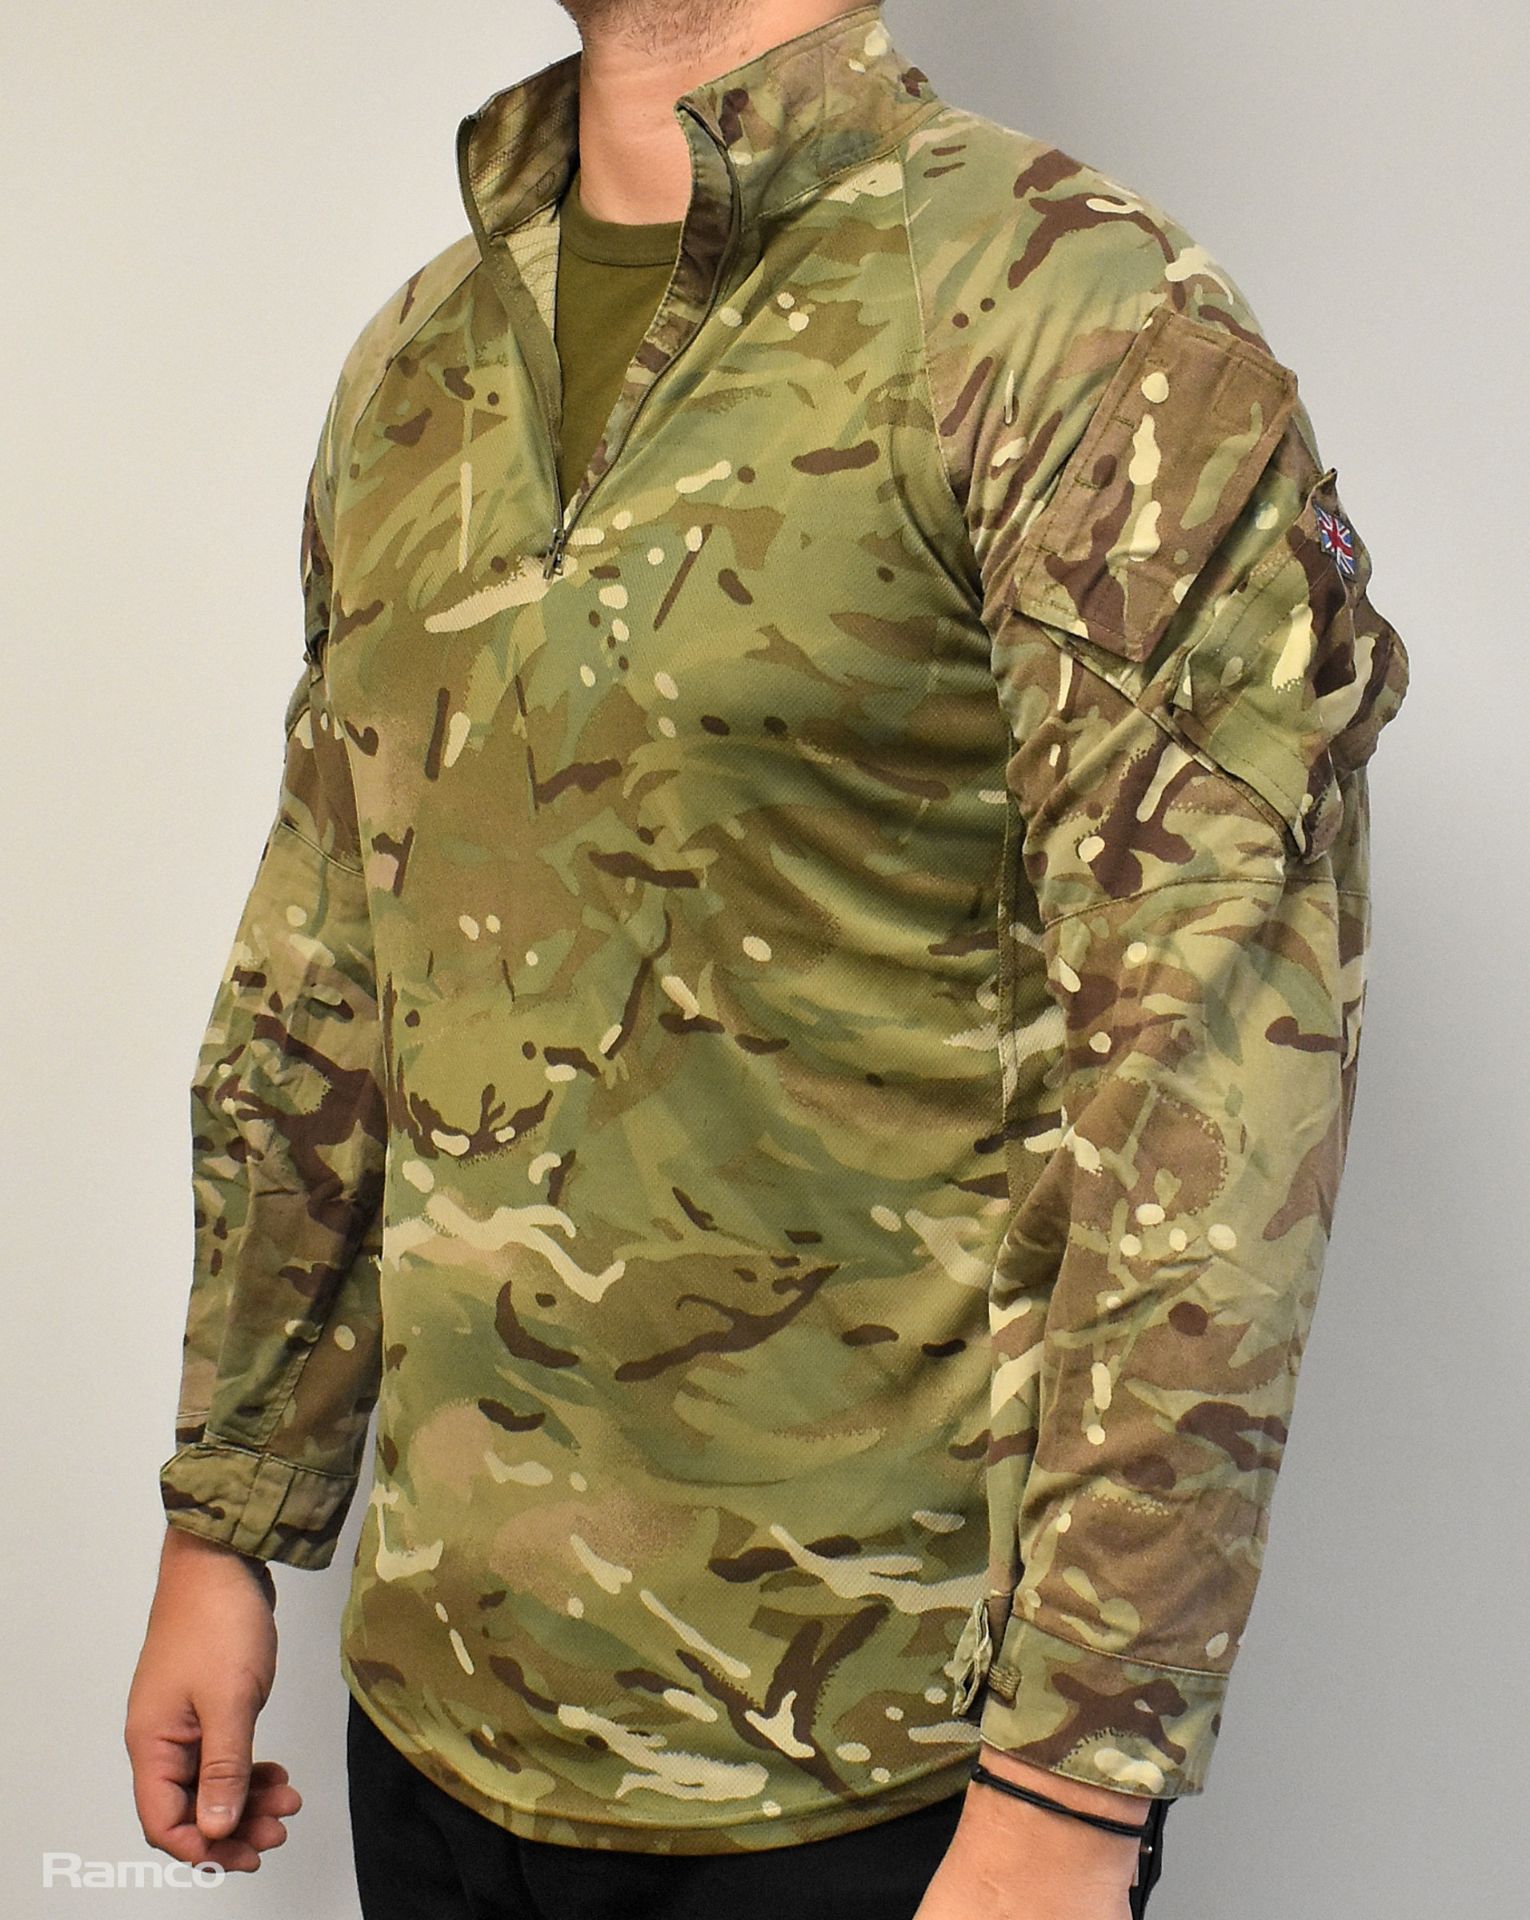 60x British Army MTP UBAC's shirts - mixed types - mixed grades and sizes - Image 2 of 12